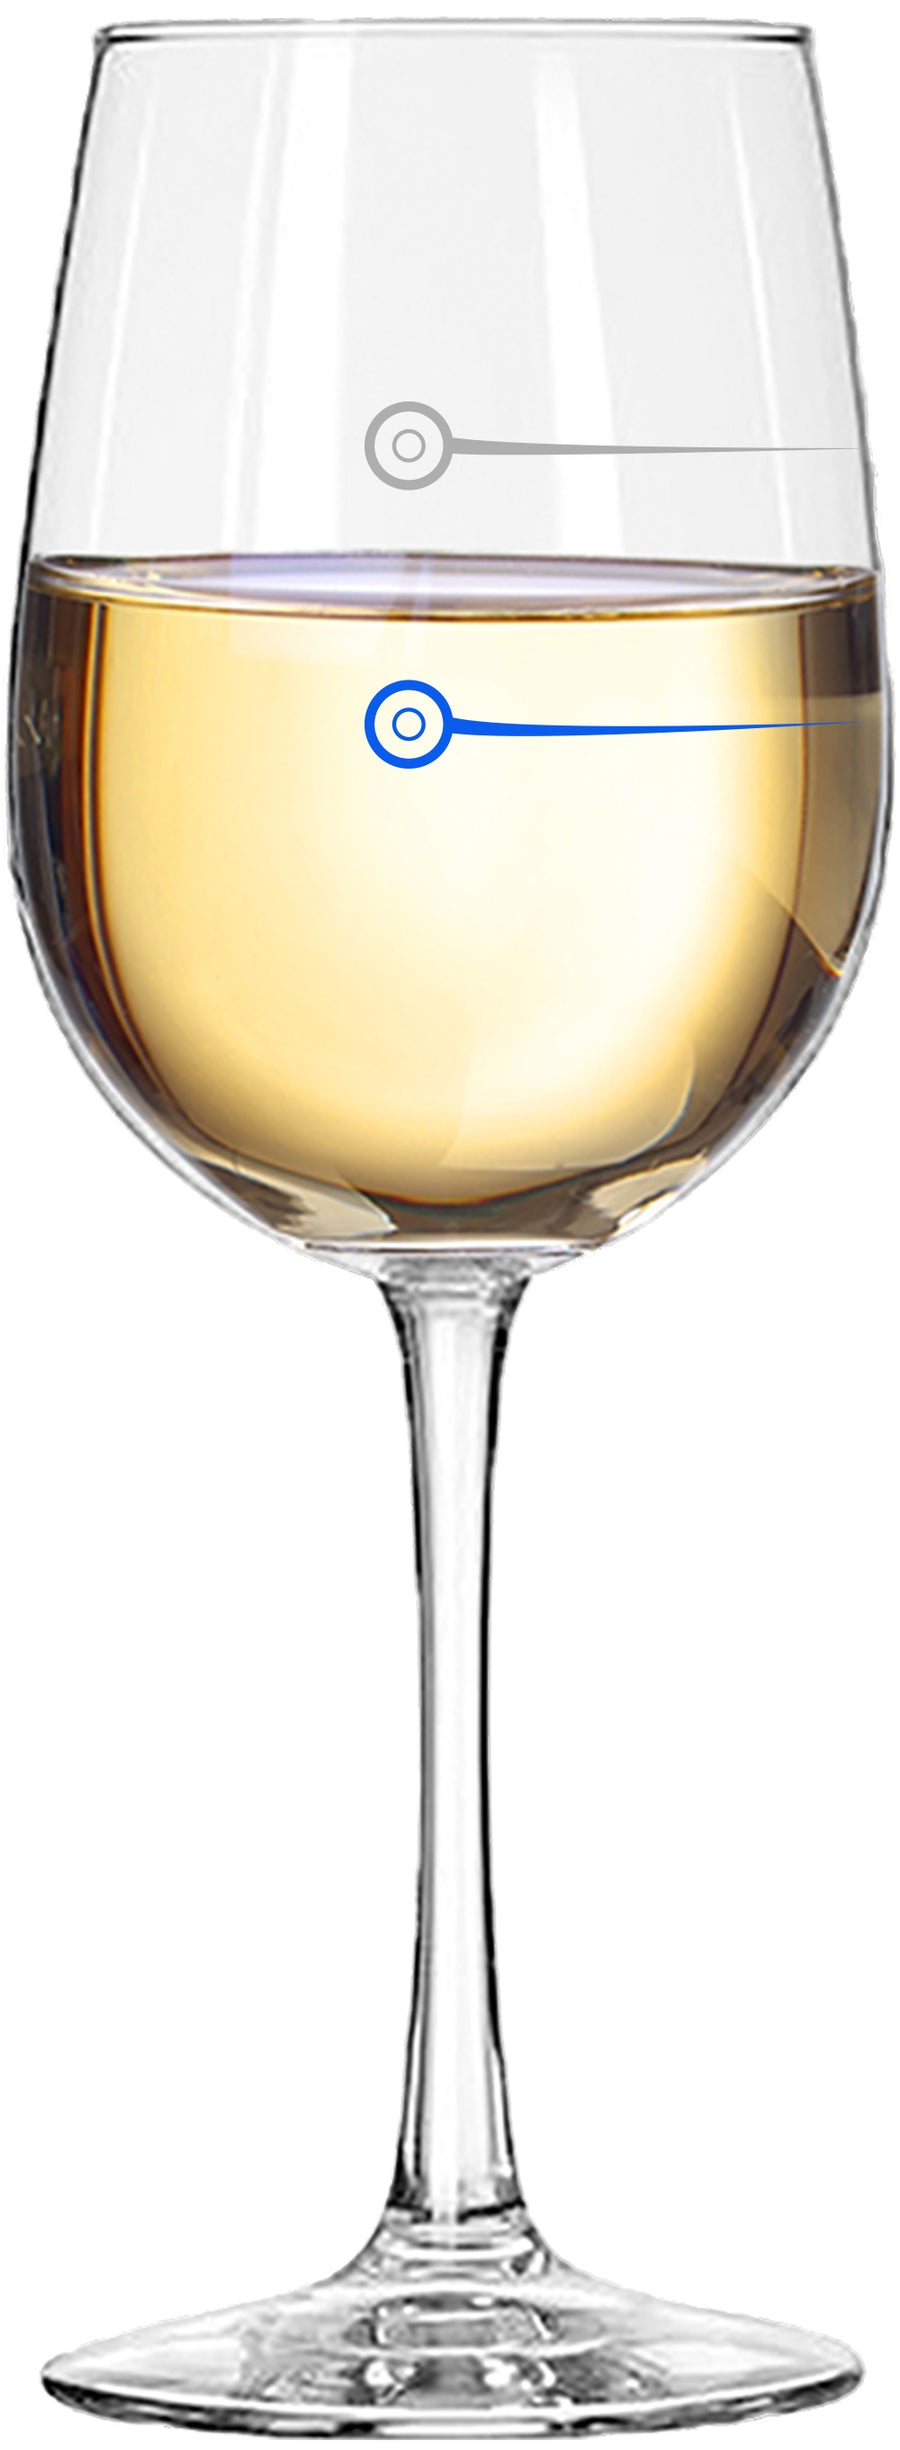 "Vixen" Stemmed Wine Glass